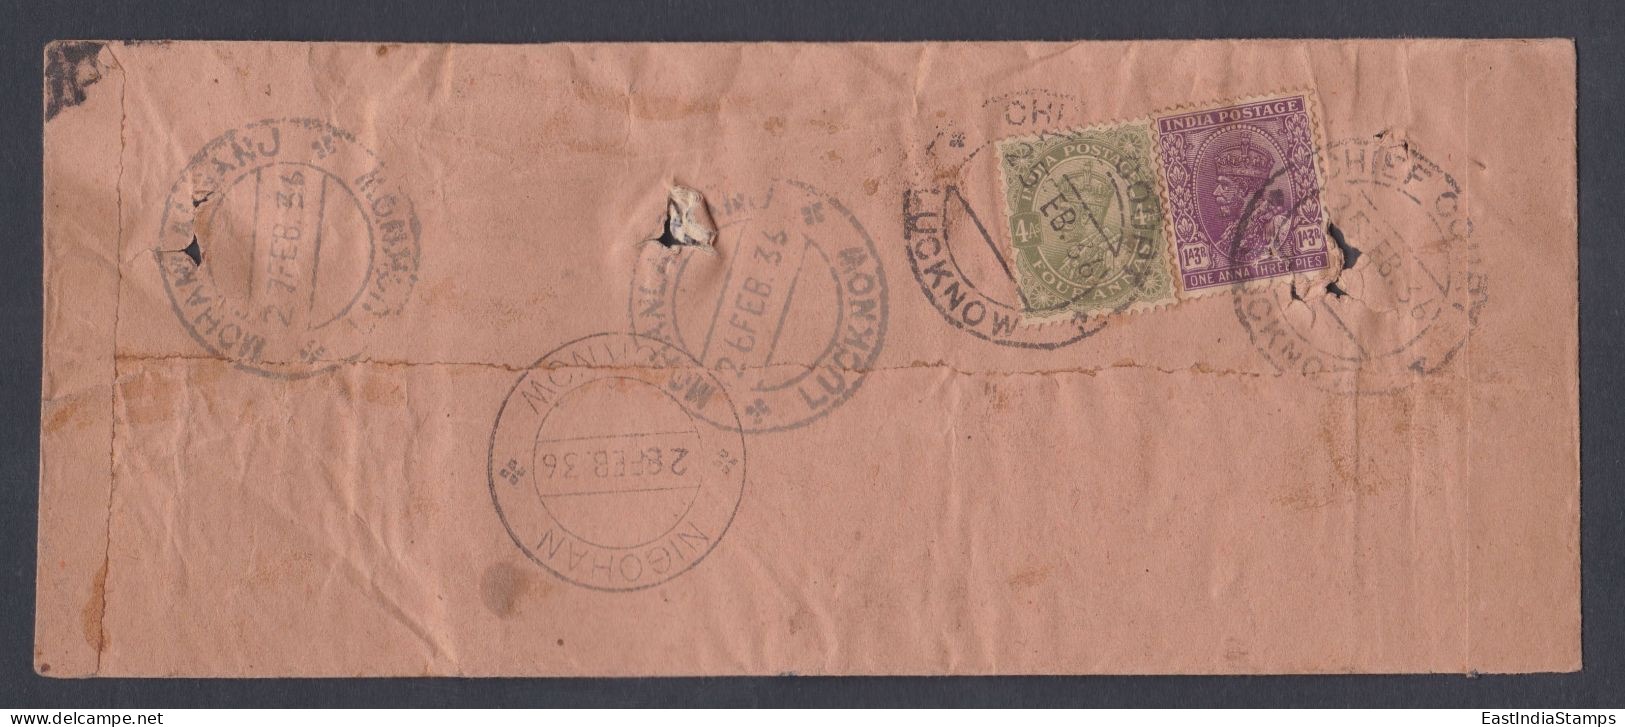 Inde British India 1936 Used Half Anna Registered Cover, Lucknow, Refused, Return Mail, King George V Stamps - 1911-35 King George V